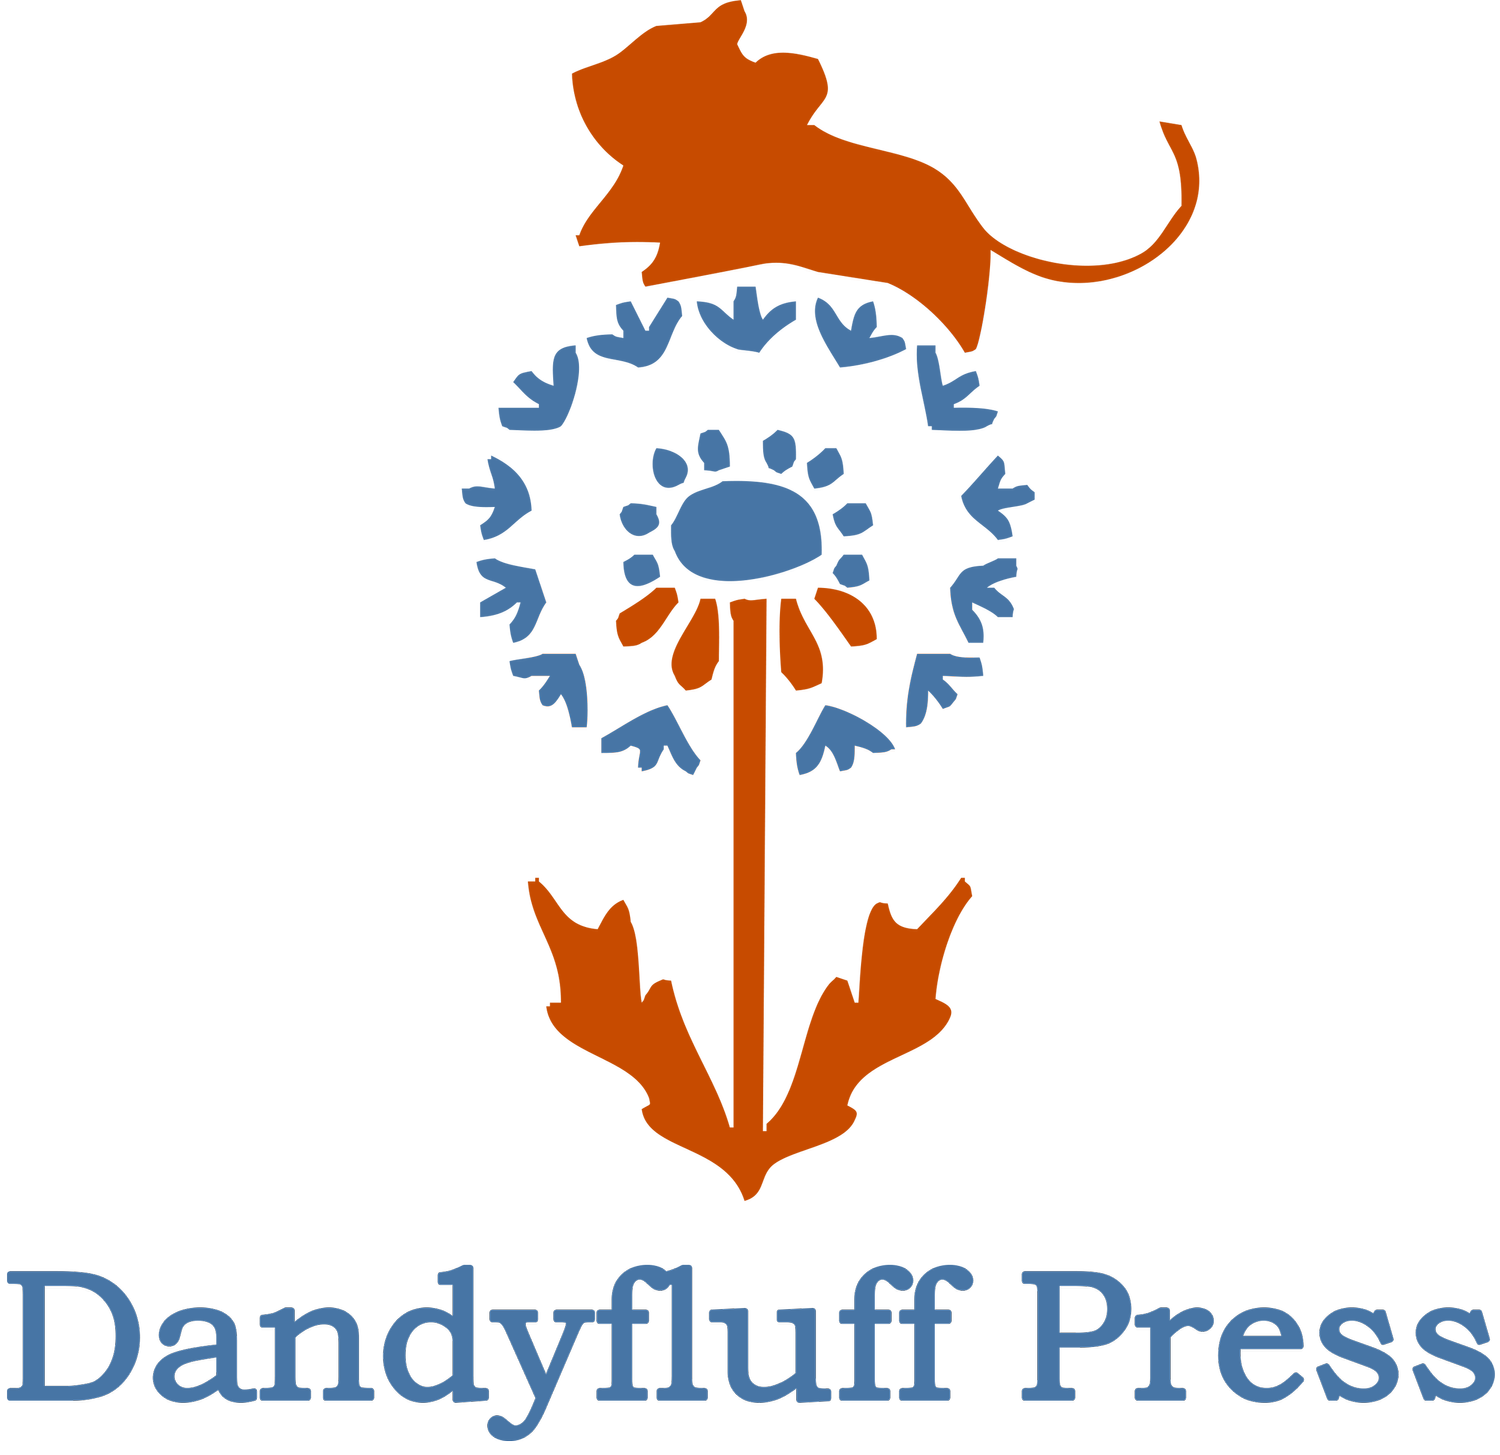 Dandyfluff Press